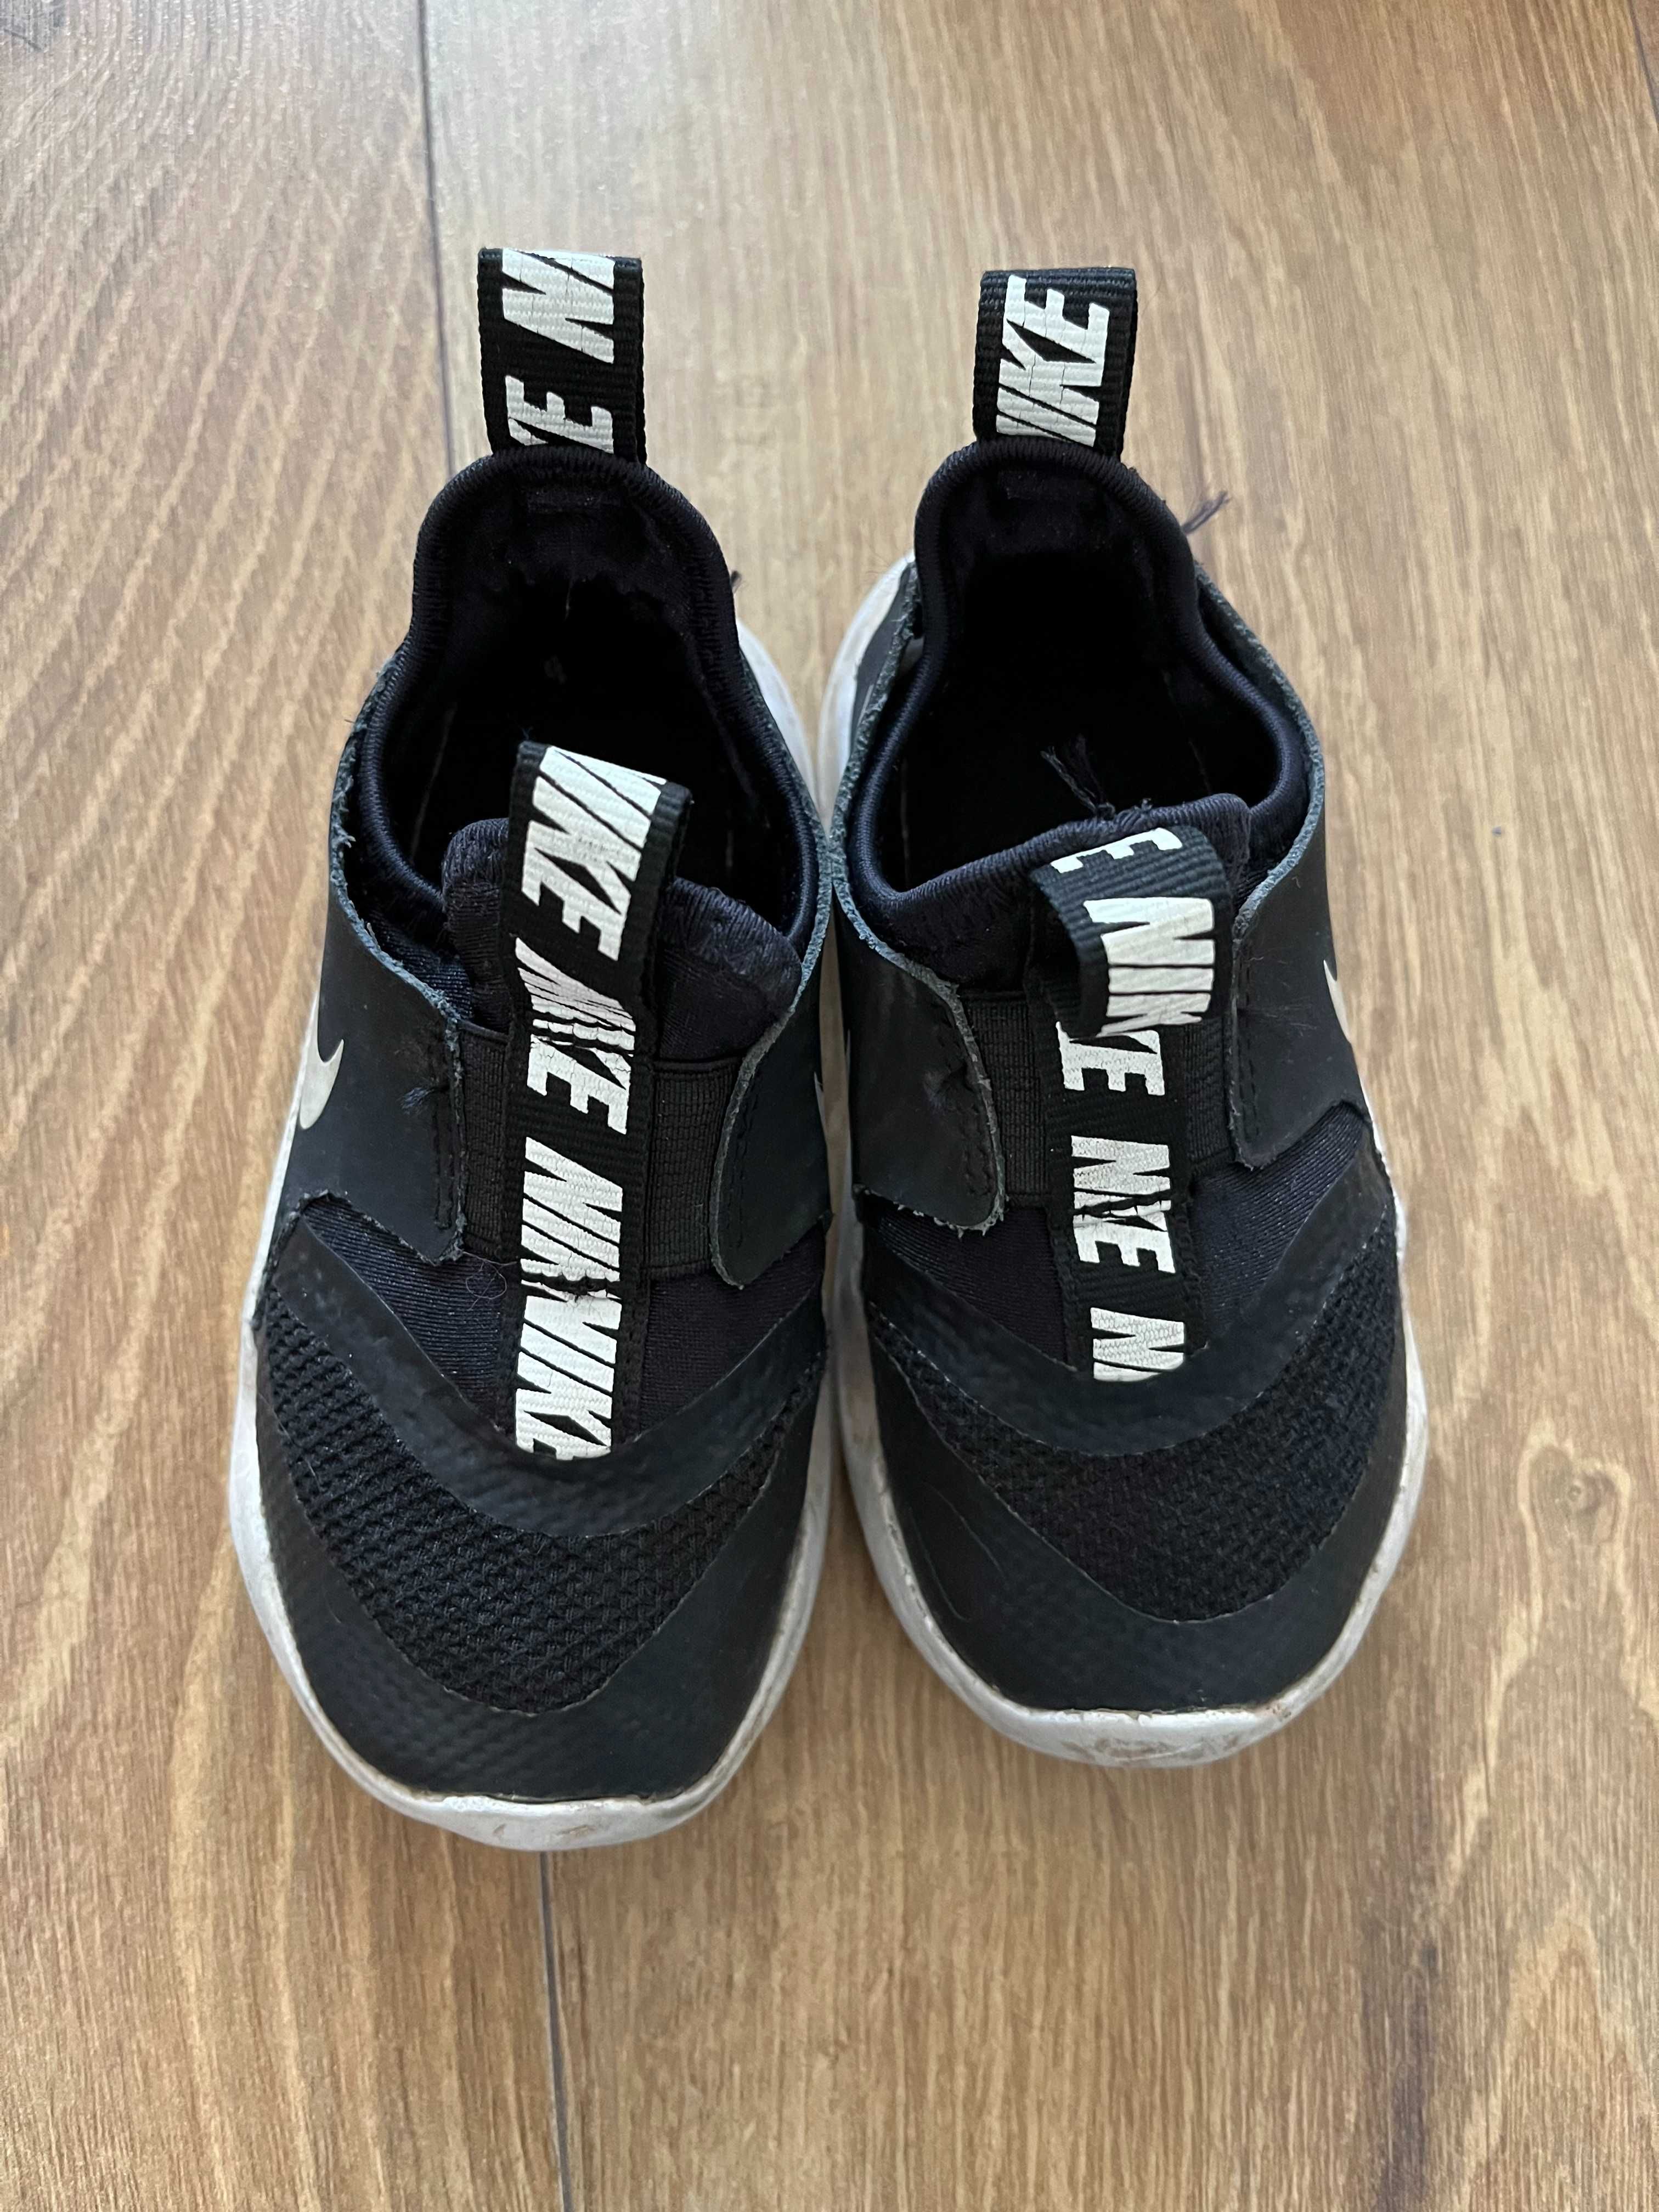 Adidasy buty dziecięce NIKE Flex Runner r. 23,5